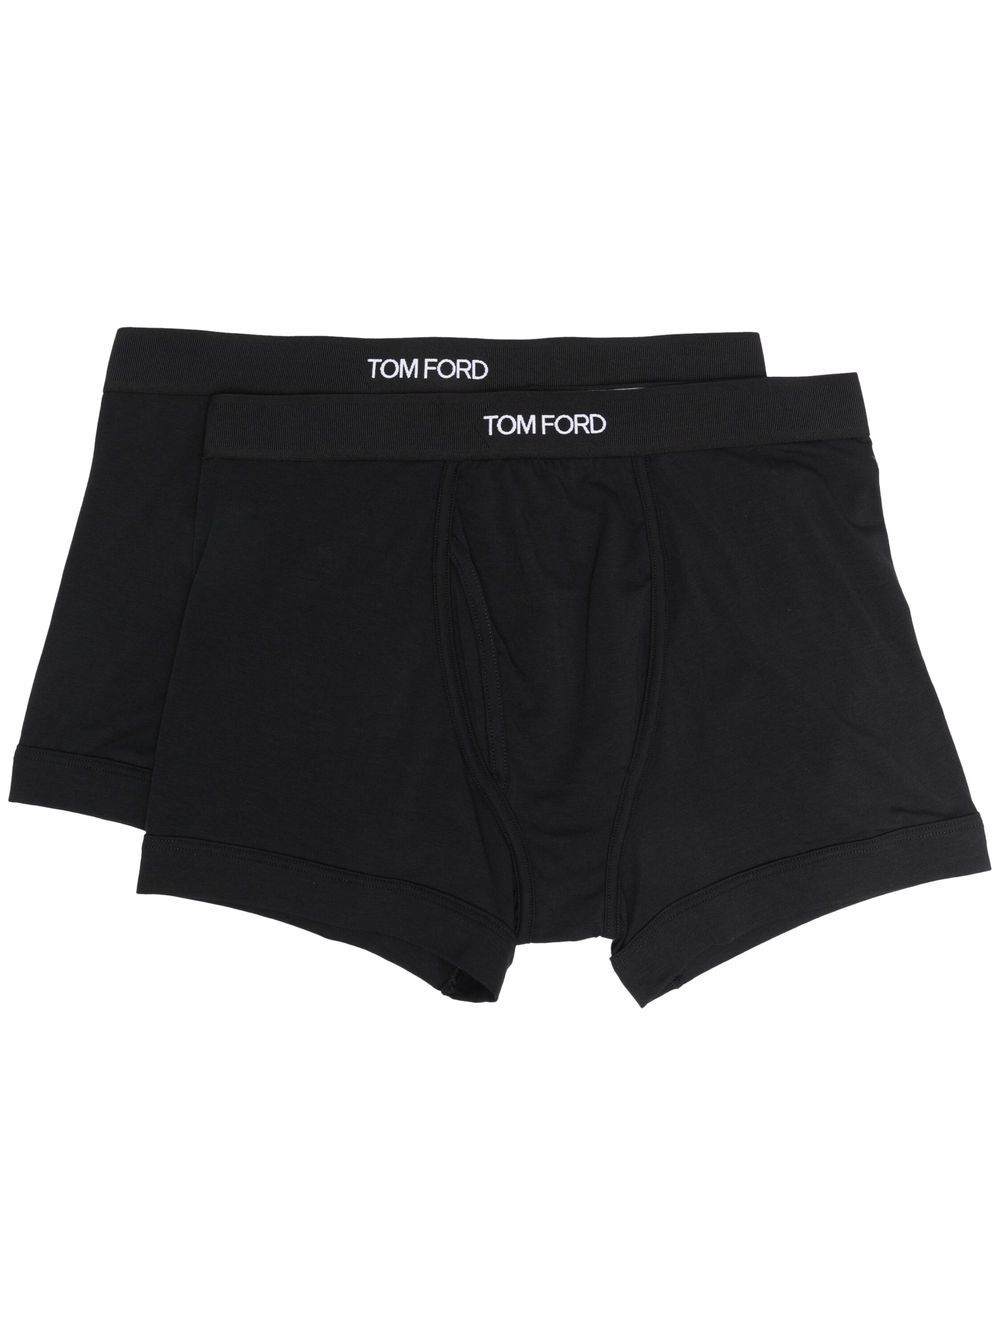 TOM FORD logo-waistband boxer briefs (set of 2) - Black von TOM FORD